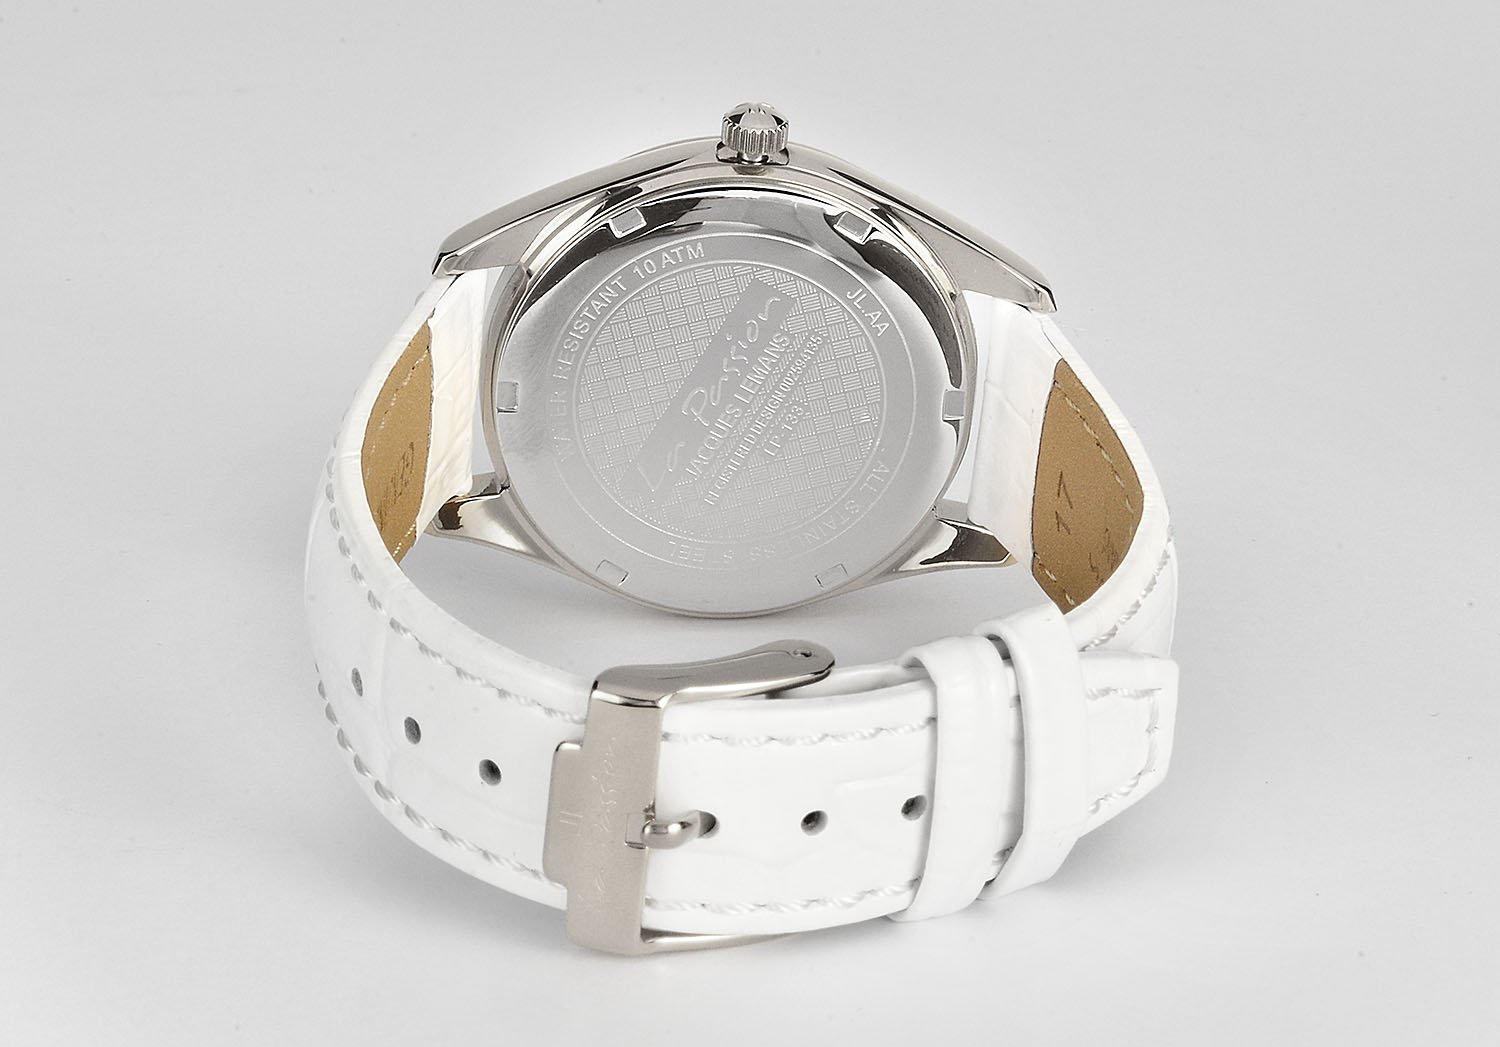 LP-132B, наручные часы Jacques Lemans